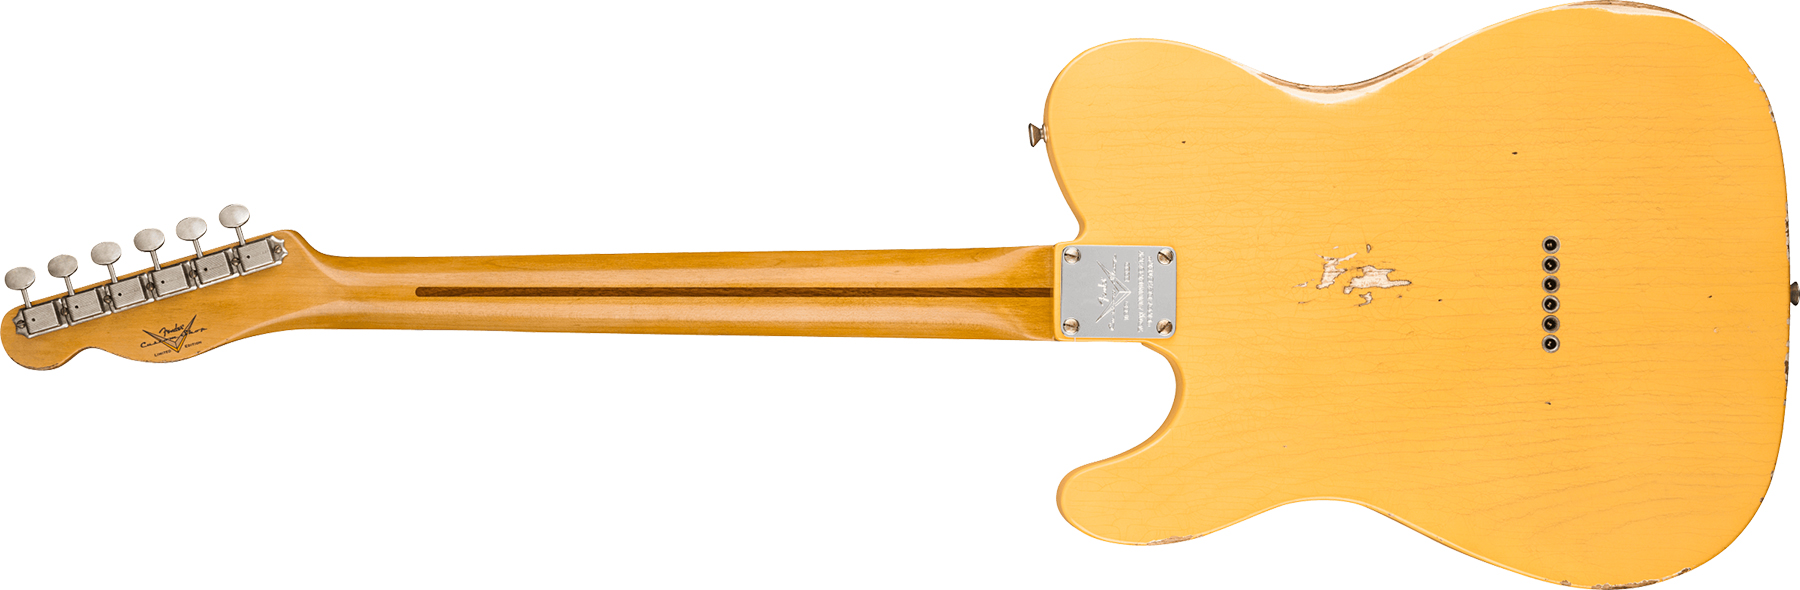 Fender Custom Shop Broadcaster Tele 70th Anniversary Ltd Mn - Relic Aged Nocaster Blonde - E-Gitarre in Teleform - Variation 1